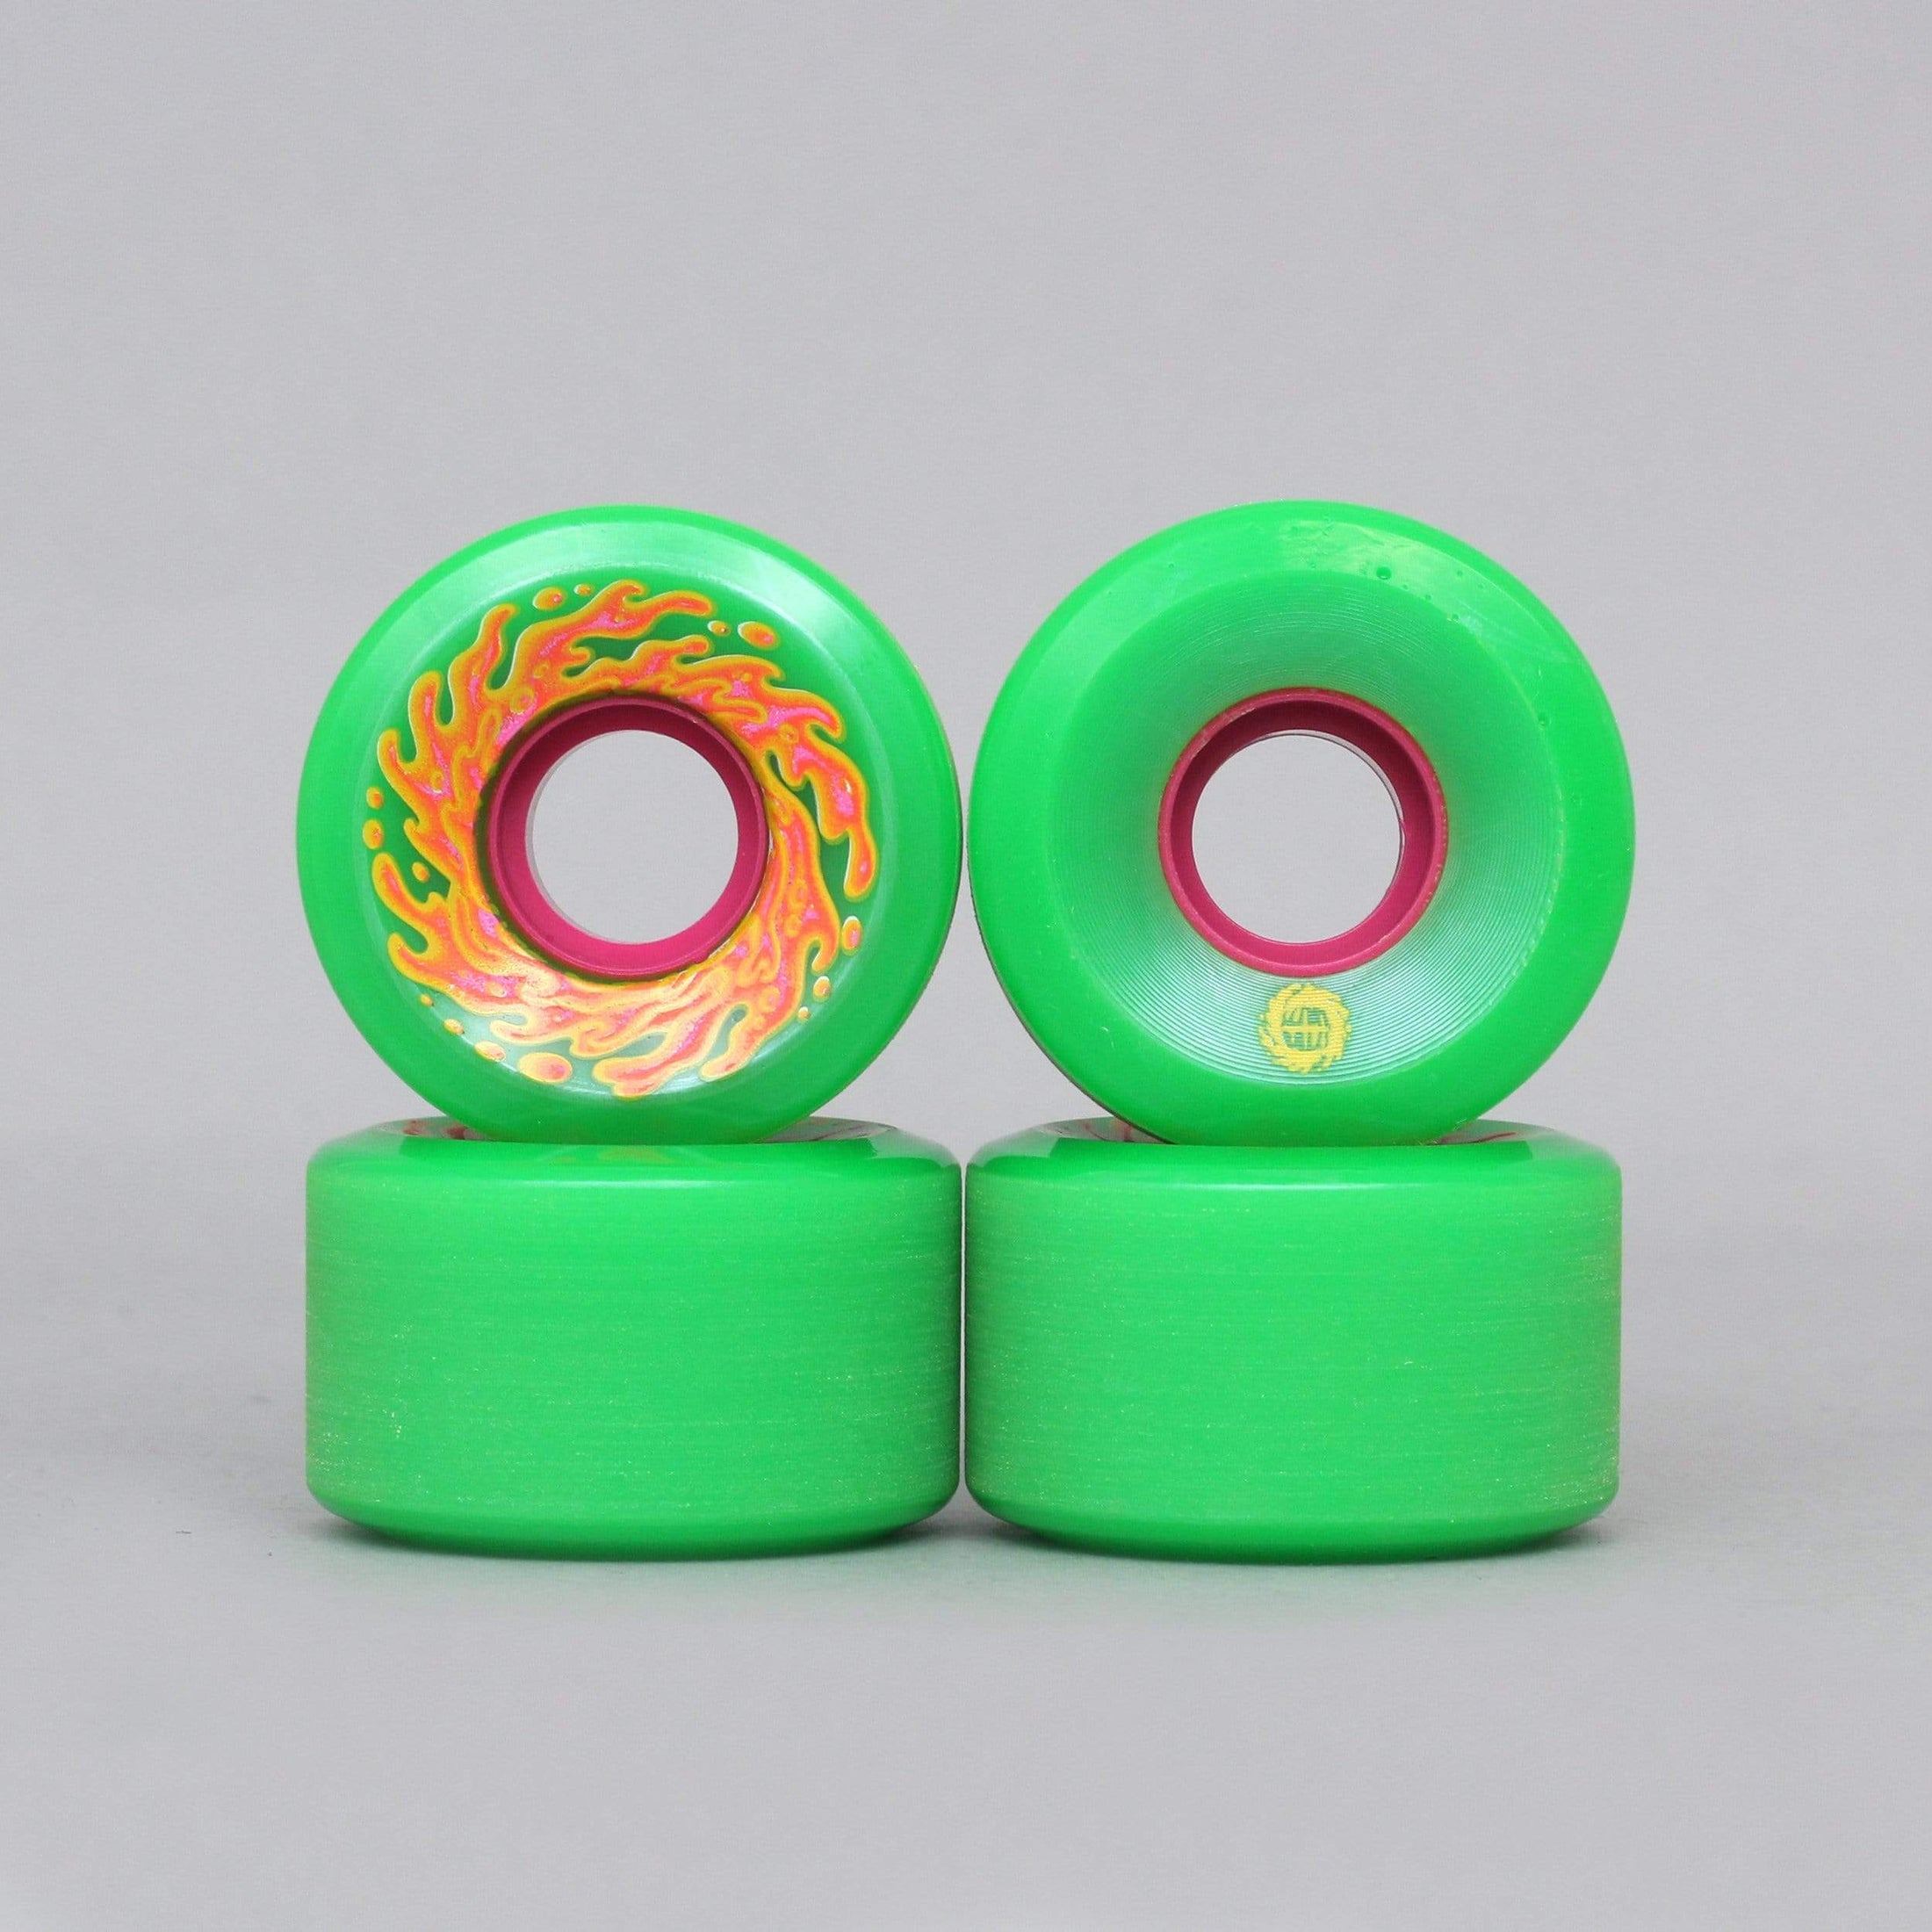 Santa Cruz 54.5mm 78A Slime Balls OG Slime Skateboard Wheels Green / Pink